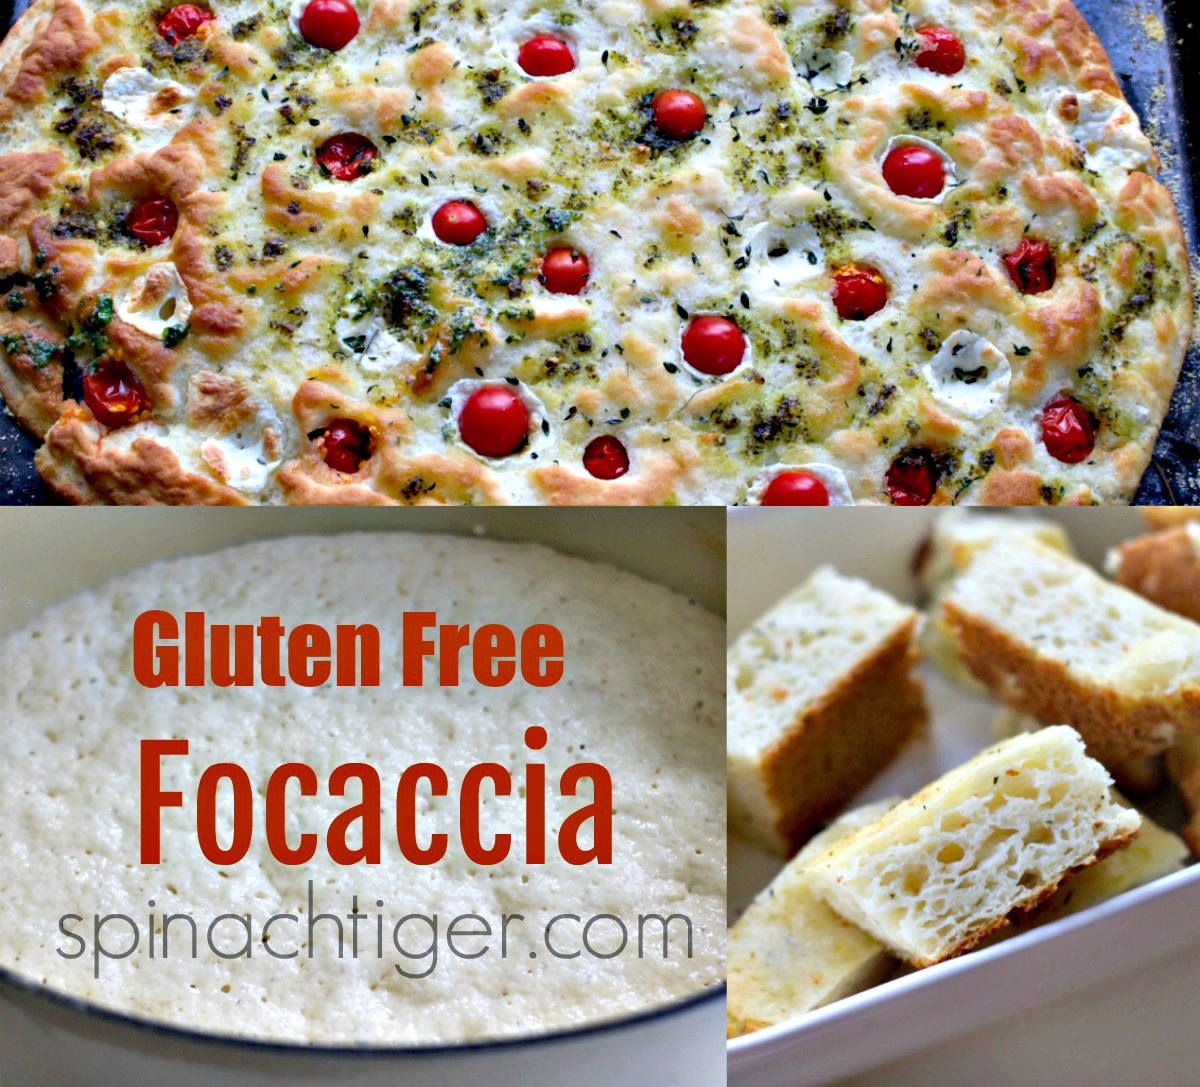 Gluten Free Focaccia from Spinach Tiger